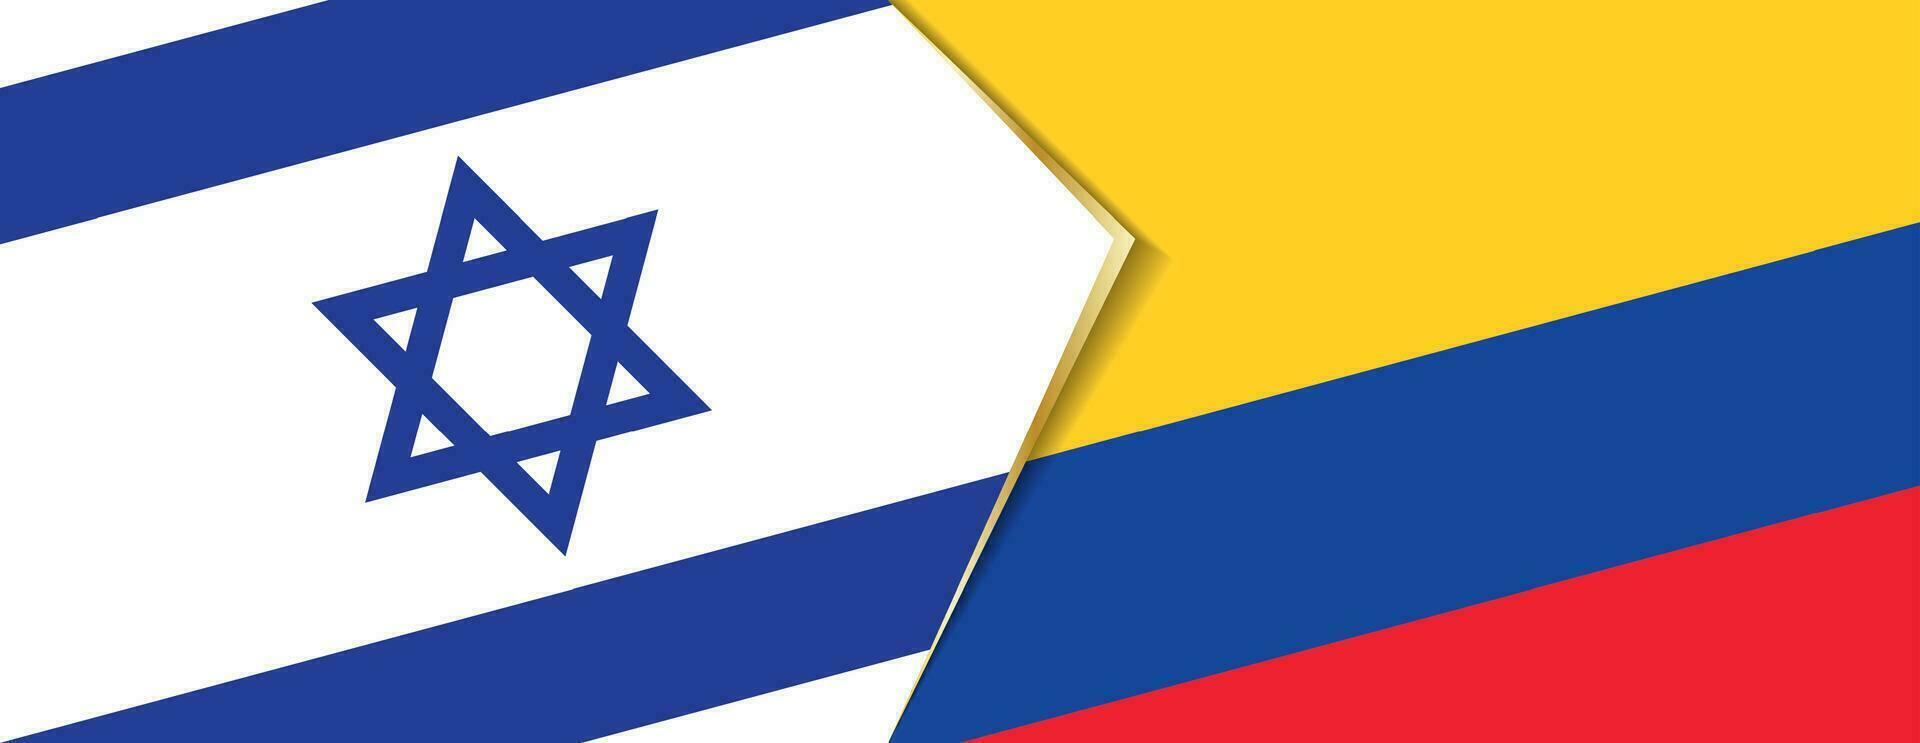 Israele e Colombia bandiere, Due vettore bandiere.